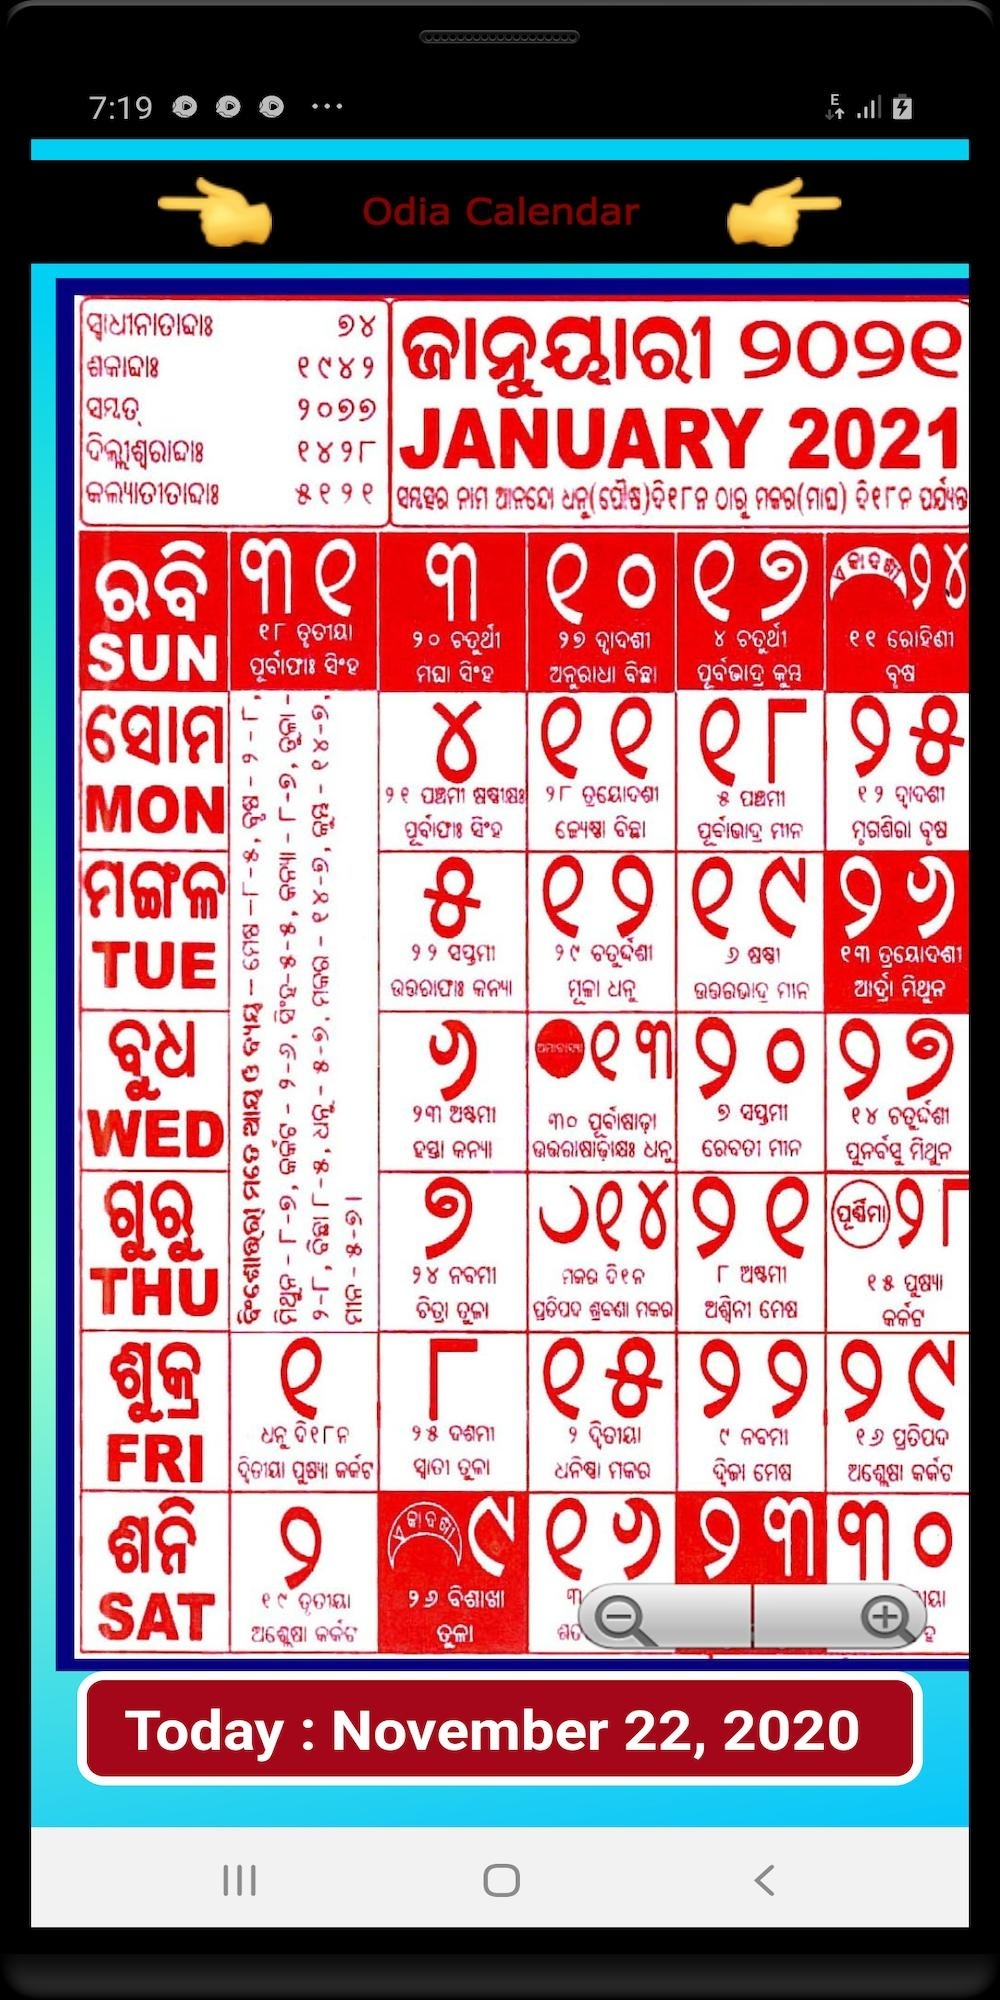 Odia Calendar 2021 For Android - Apk Download Odia Calendar 2021 July Bhagya Deepa